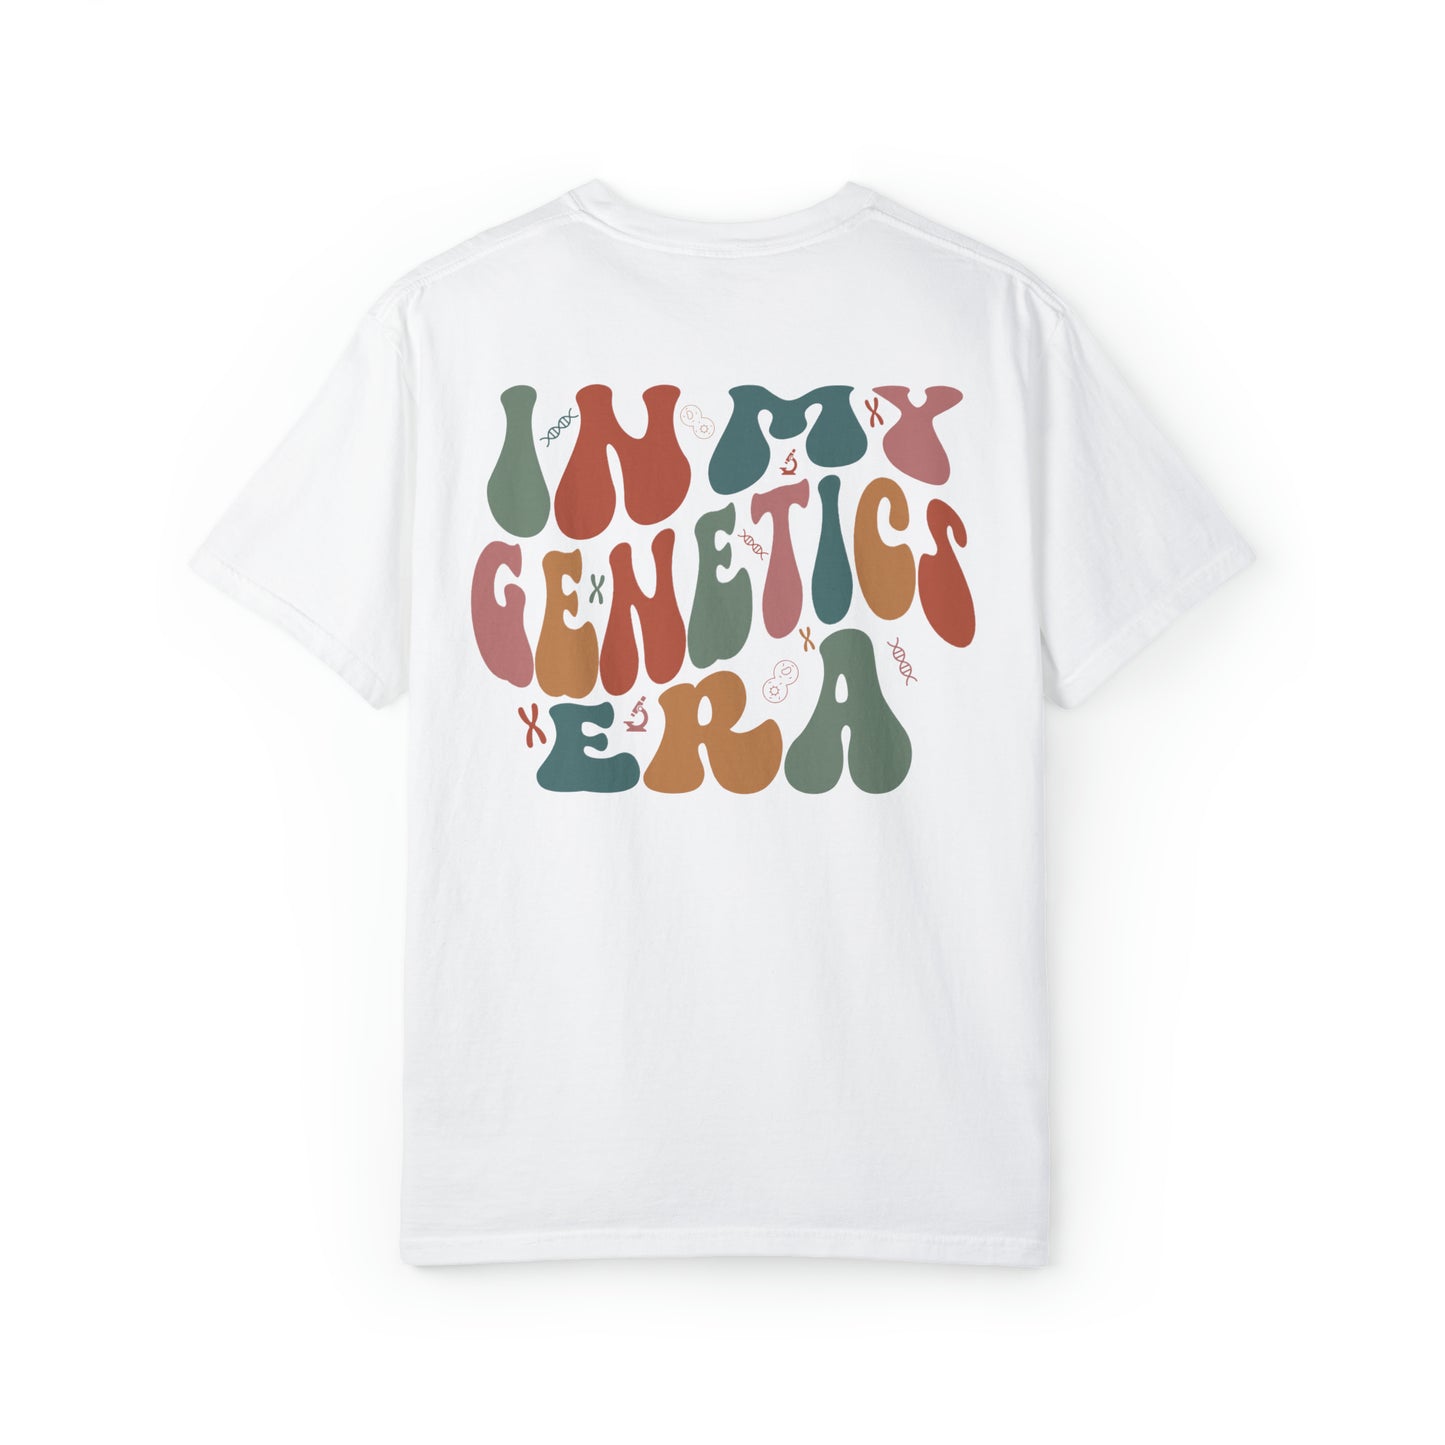 In My Genetics Era Retro Comfort Colors Shirt, Scientist Gift, Science Teacher Shirt, Biology Tee, Breaking Bad